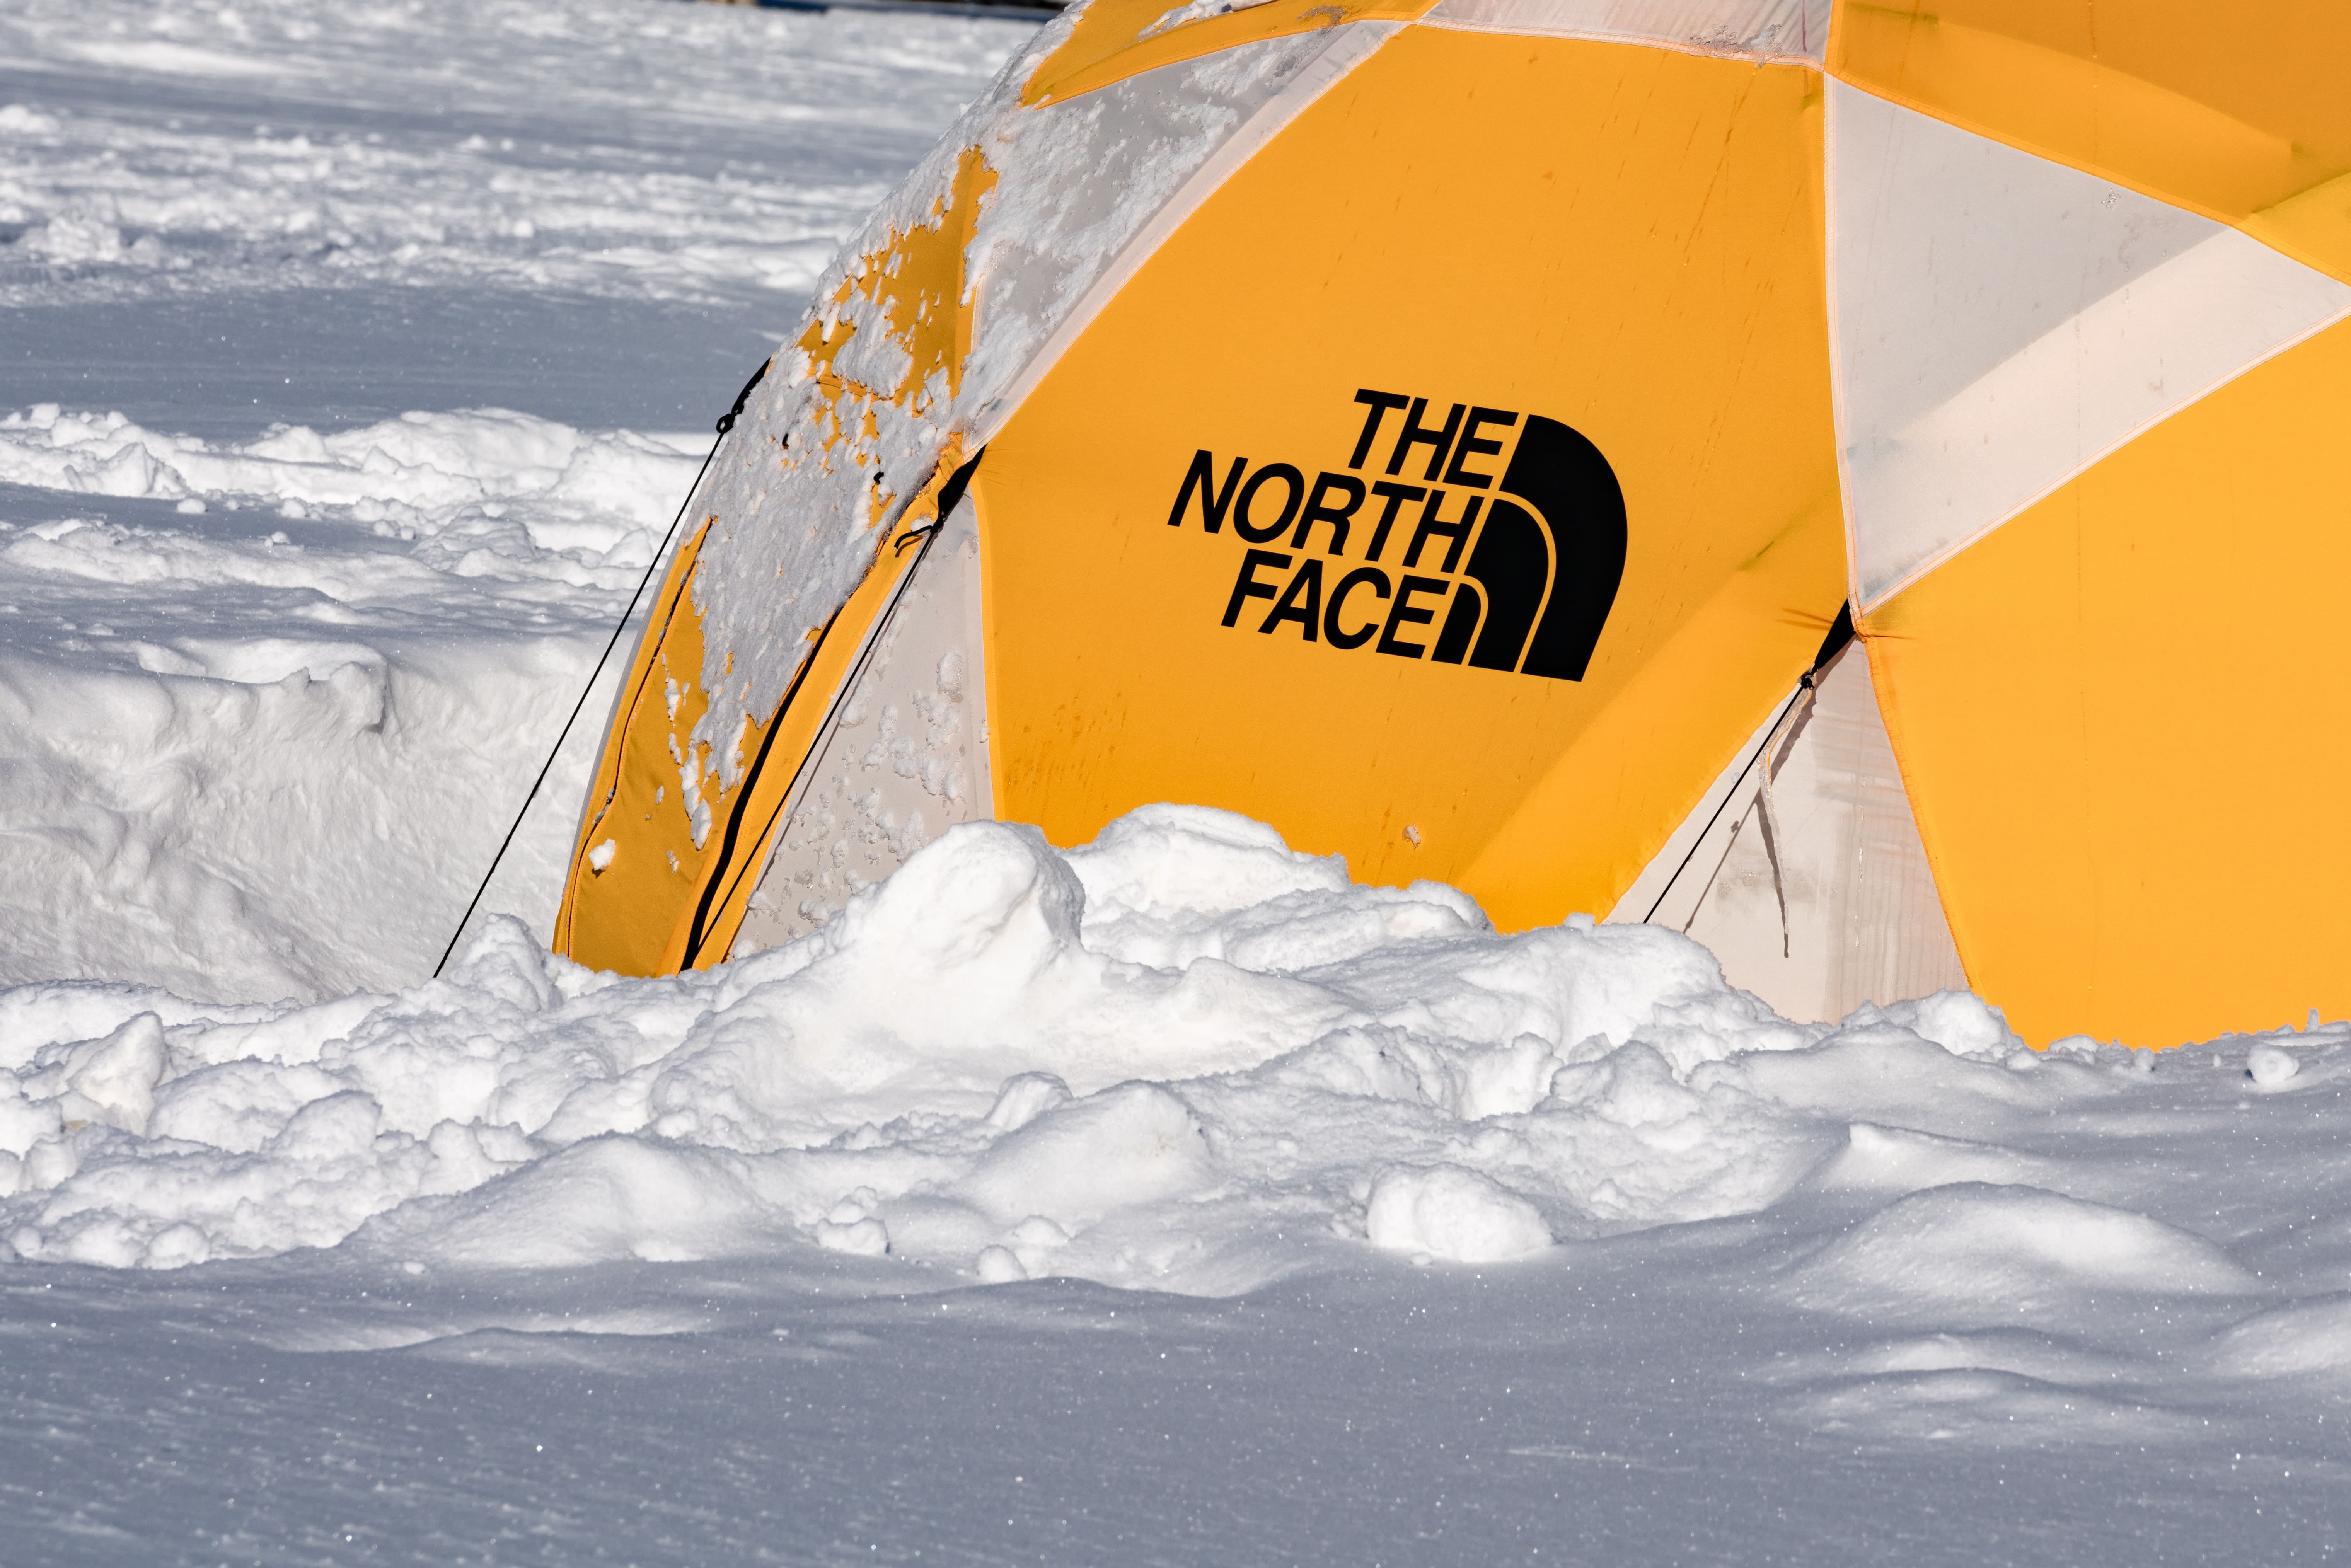 Winter camping essentials tent